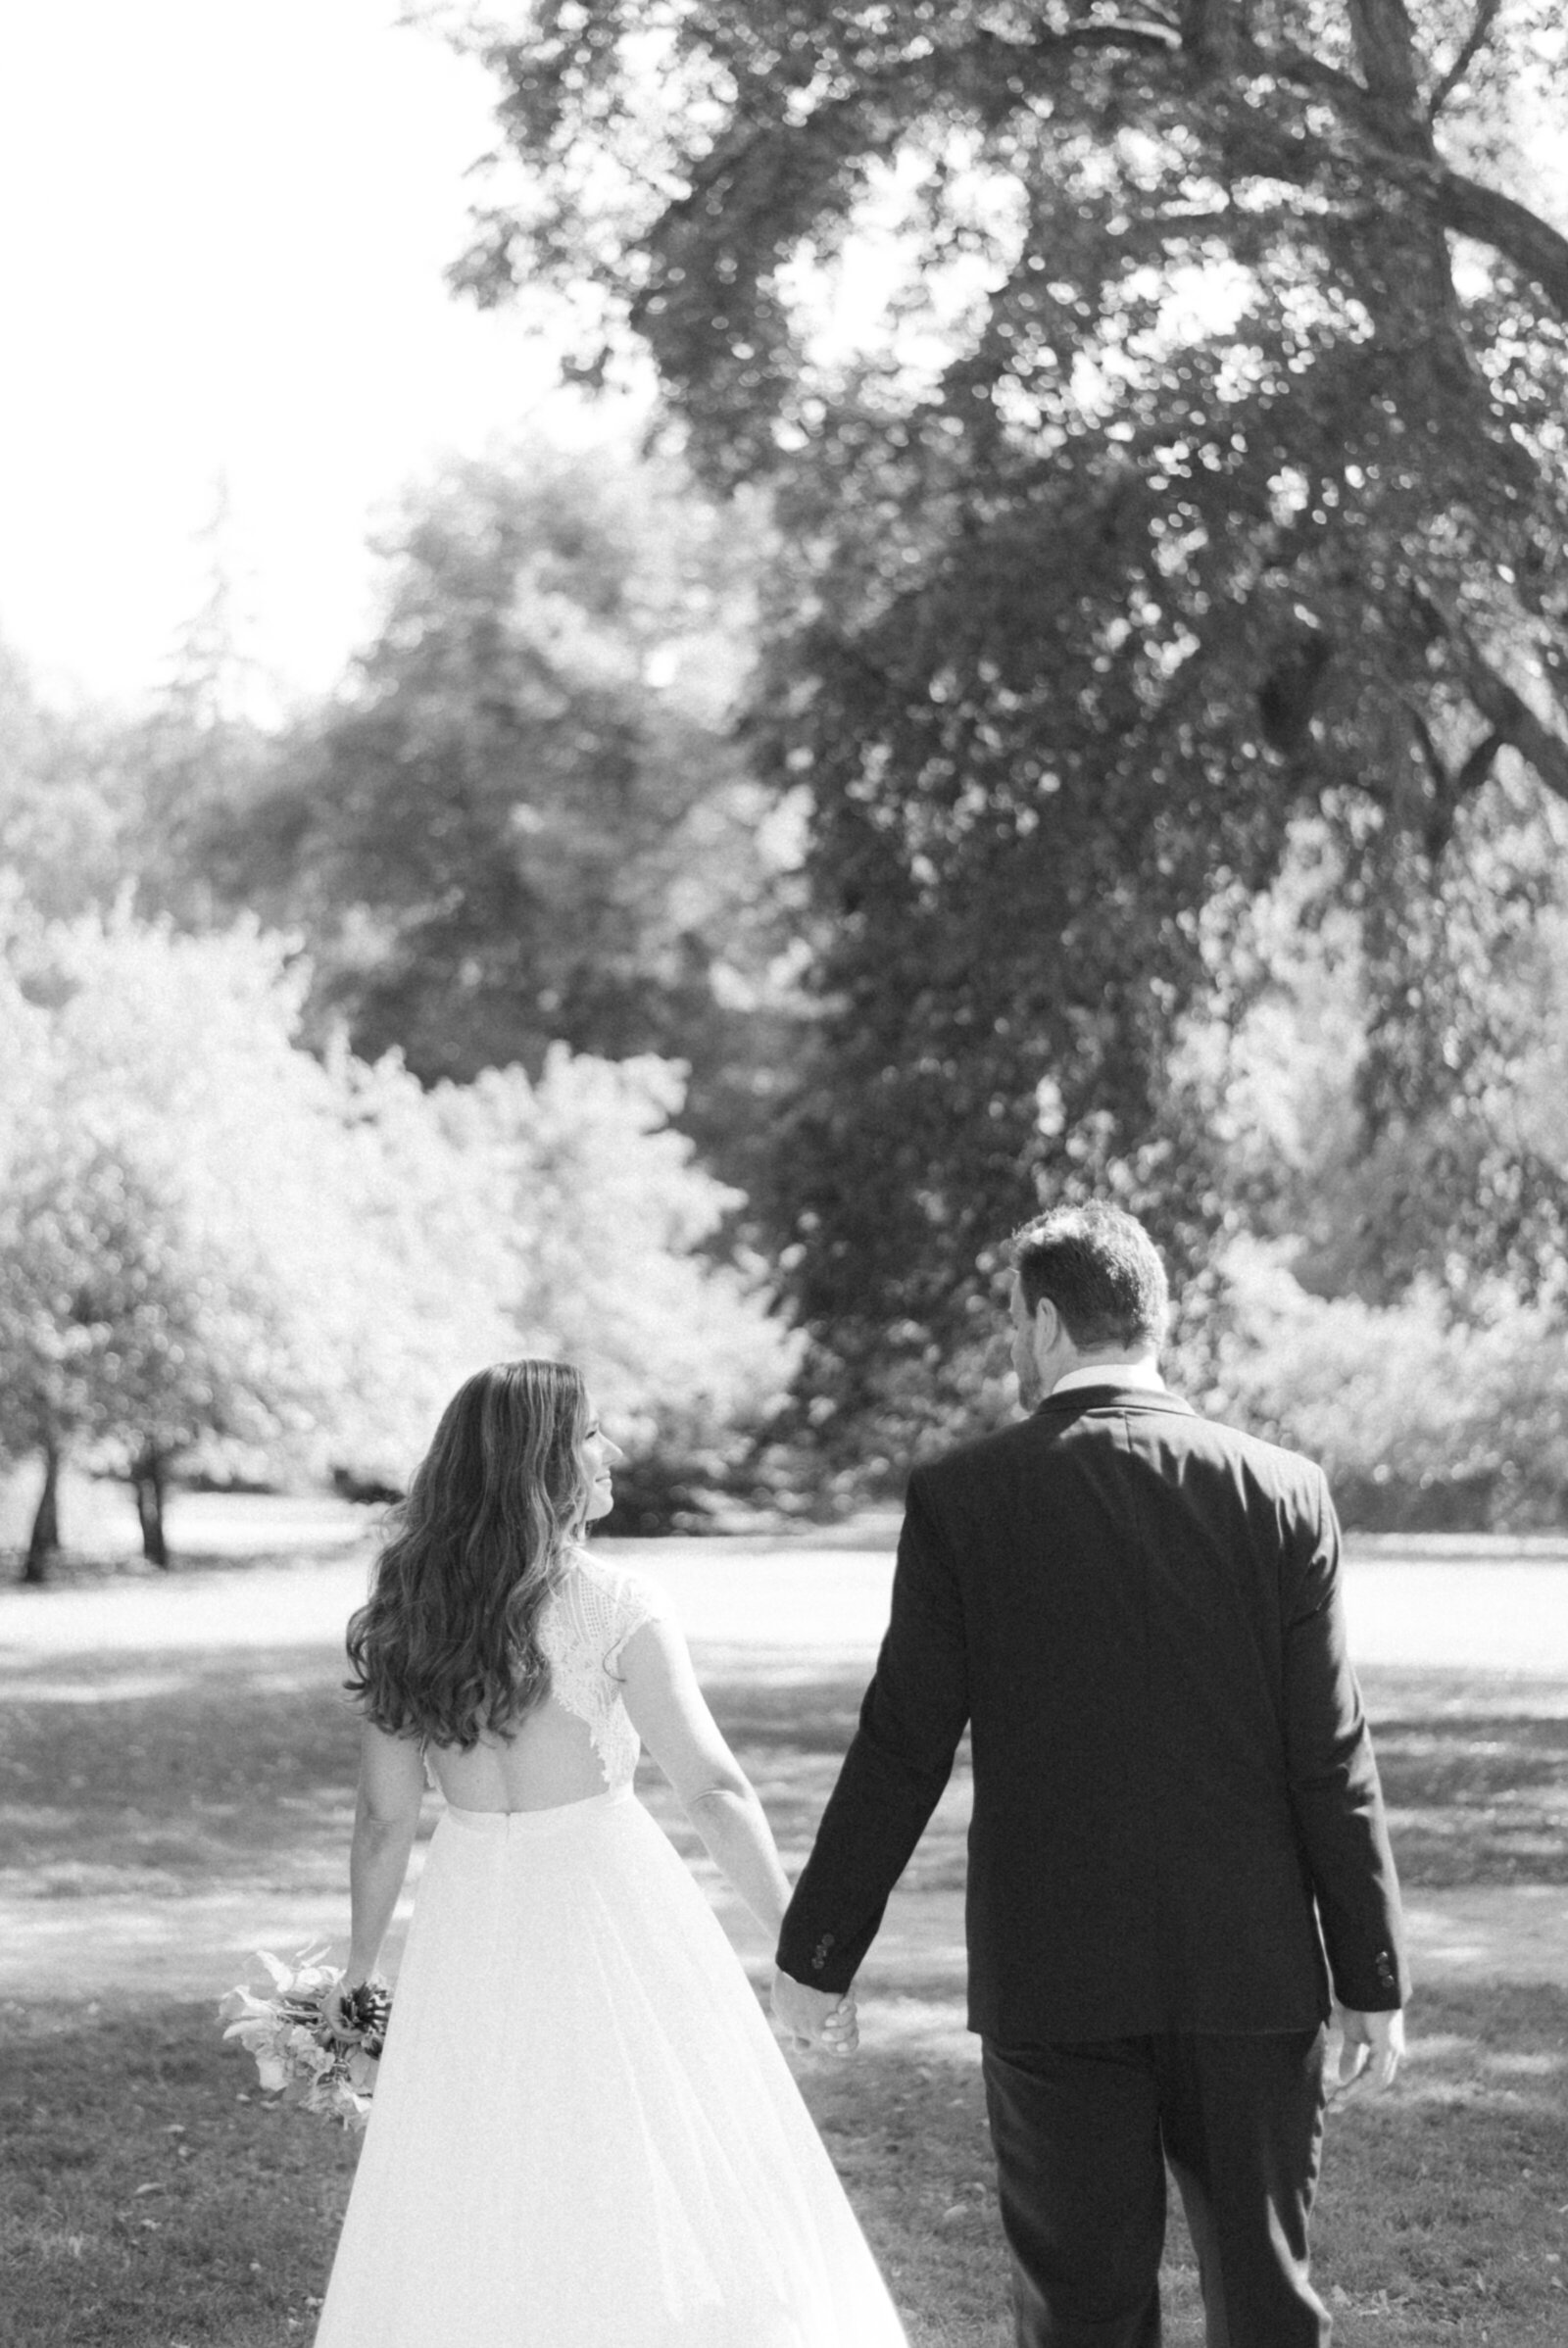 WEdding couple walking in a park during theiir wedding shoot by wedding photographer Hannika Gabrielsson.